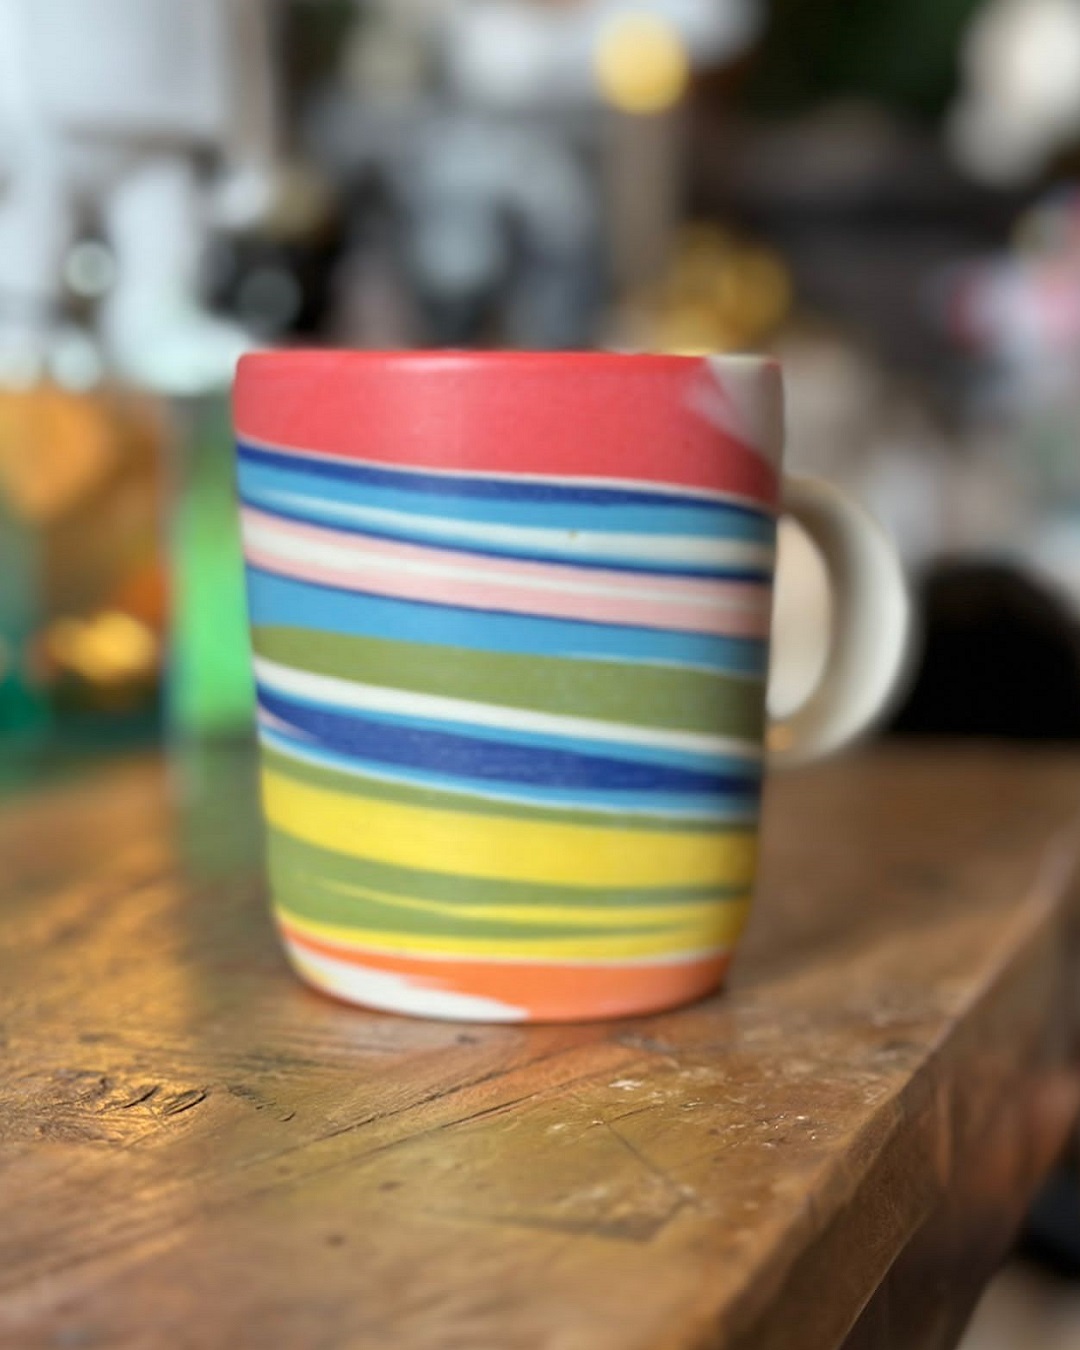 Thrown rainbow striped mug on wooden table